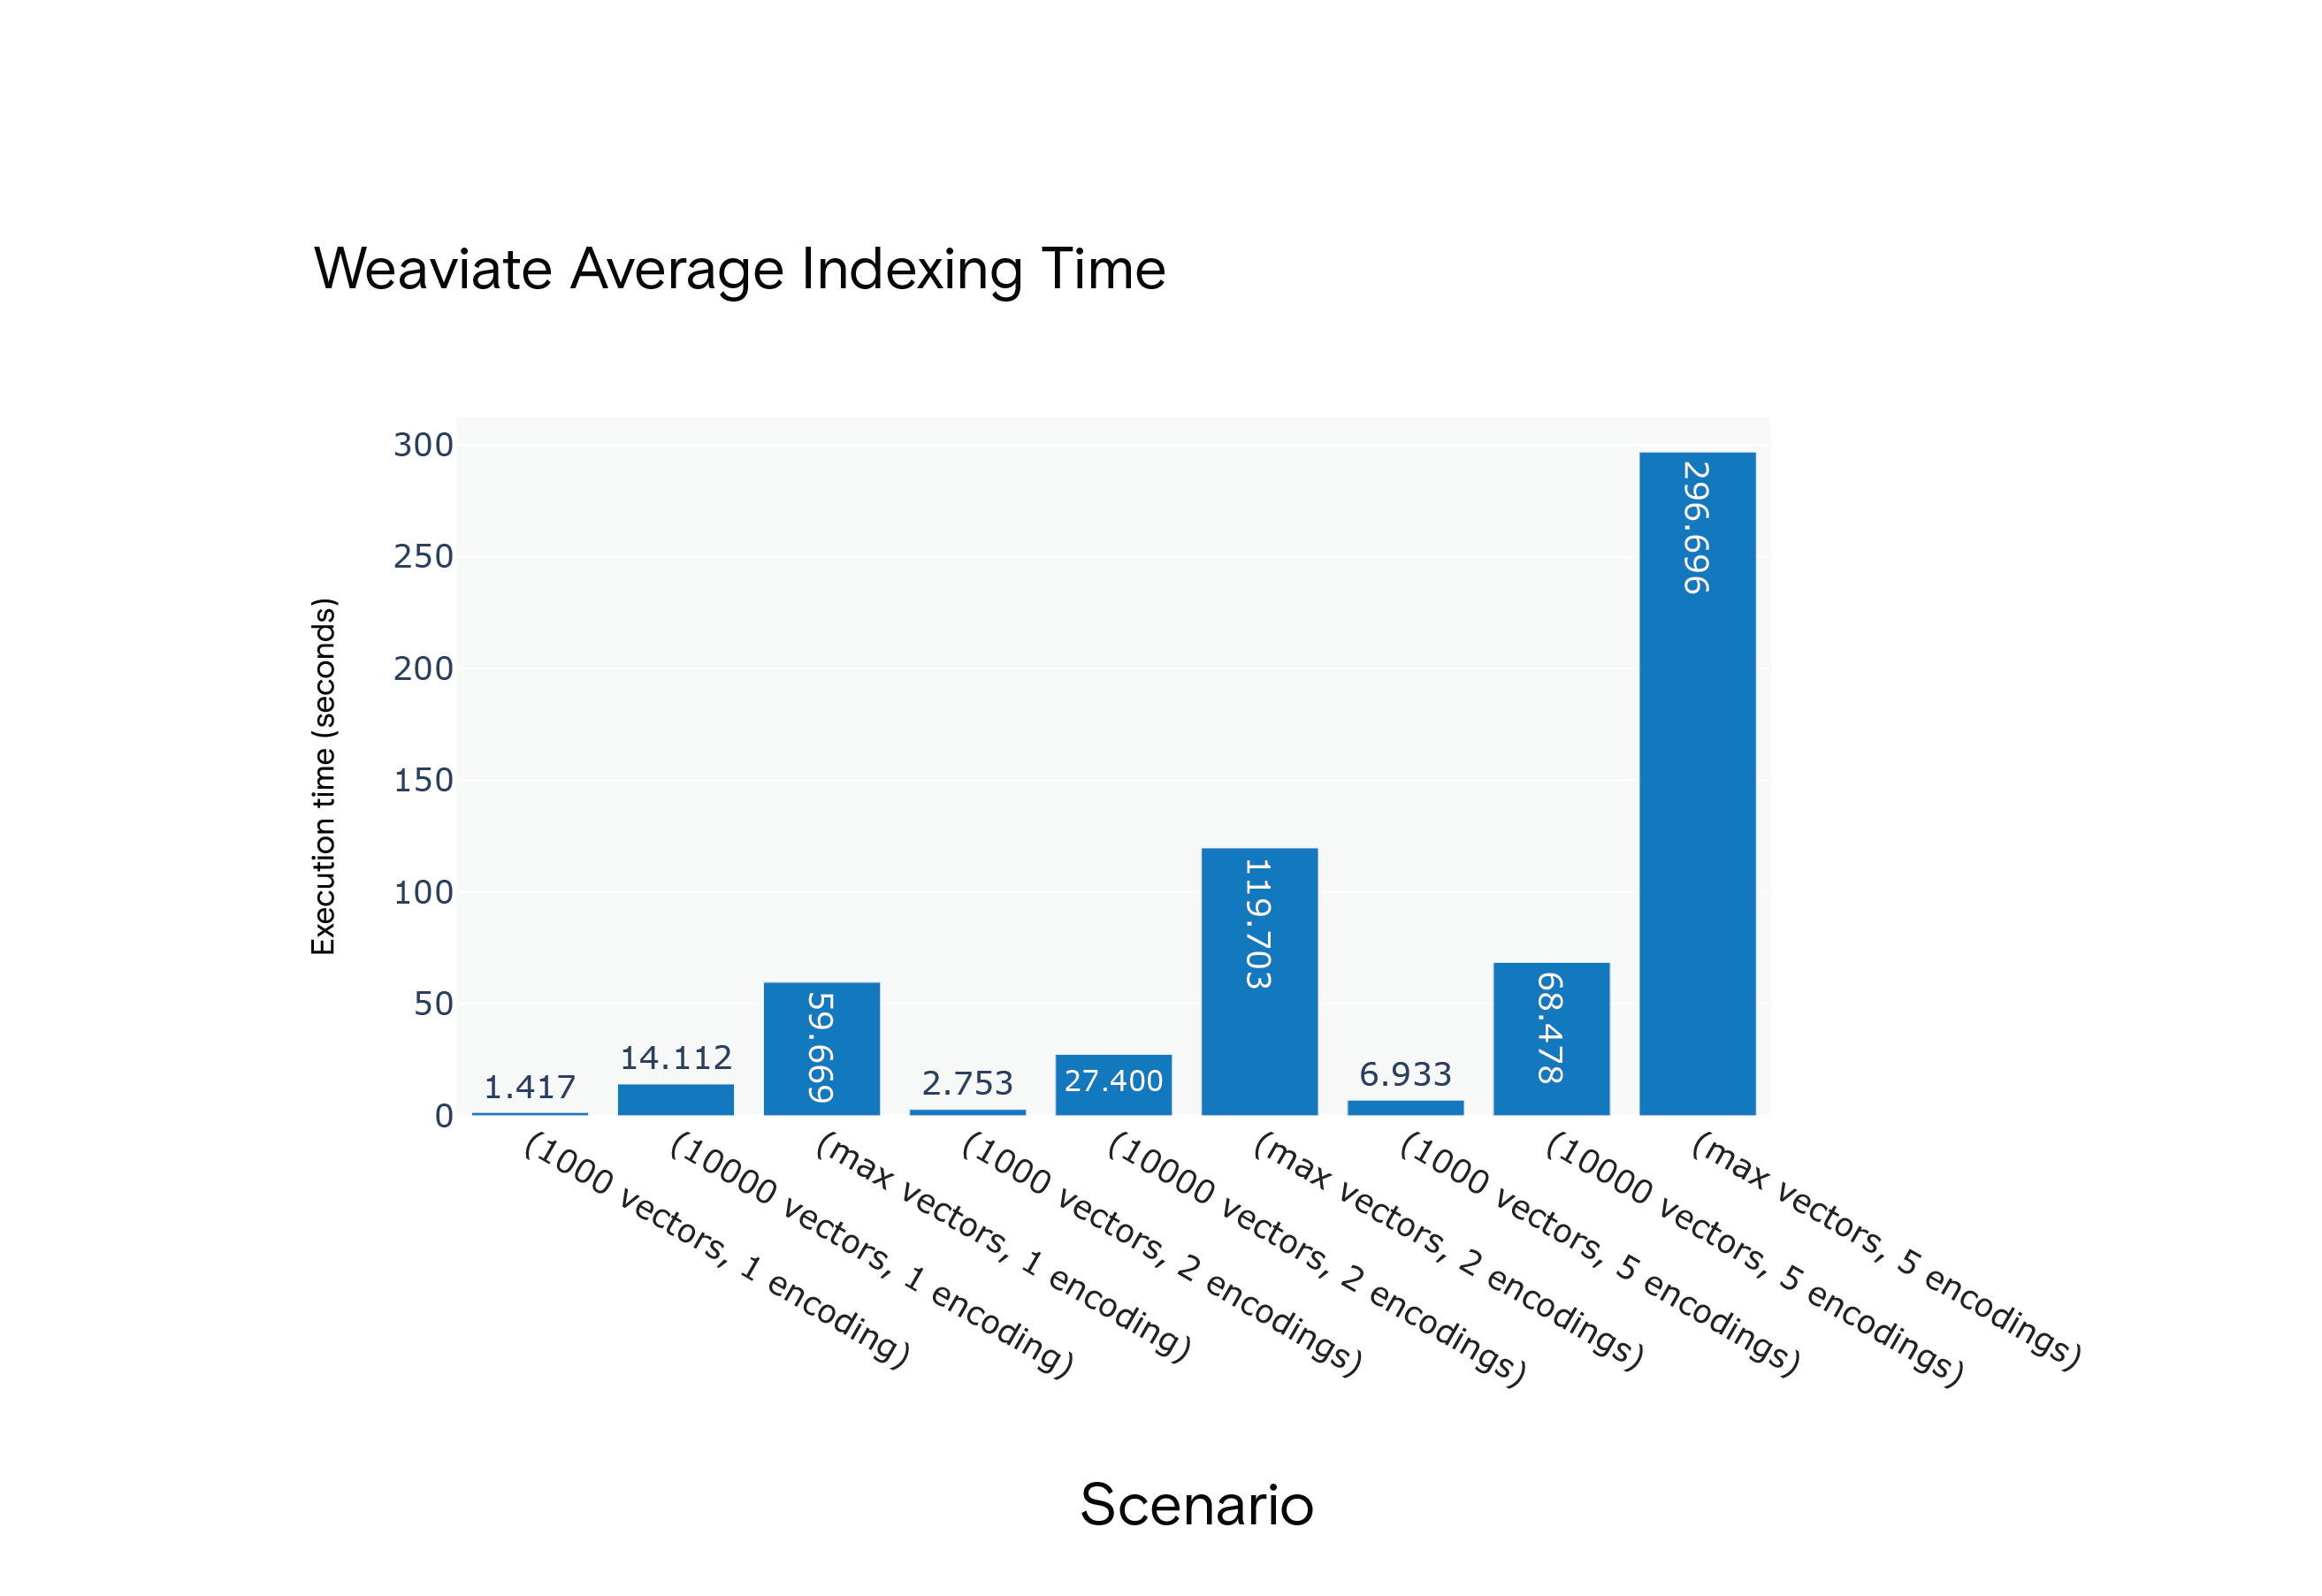 Weaviate Average Indexing Time for Scenarios S1 through S9